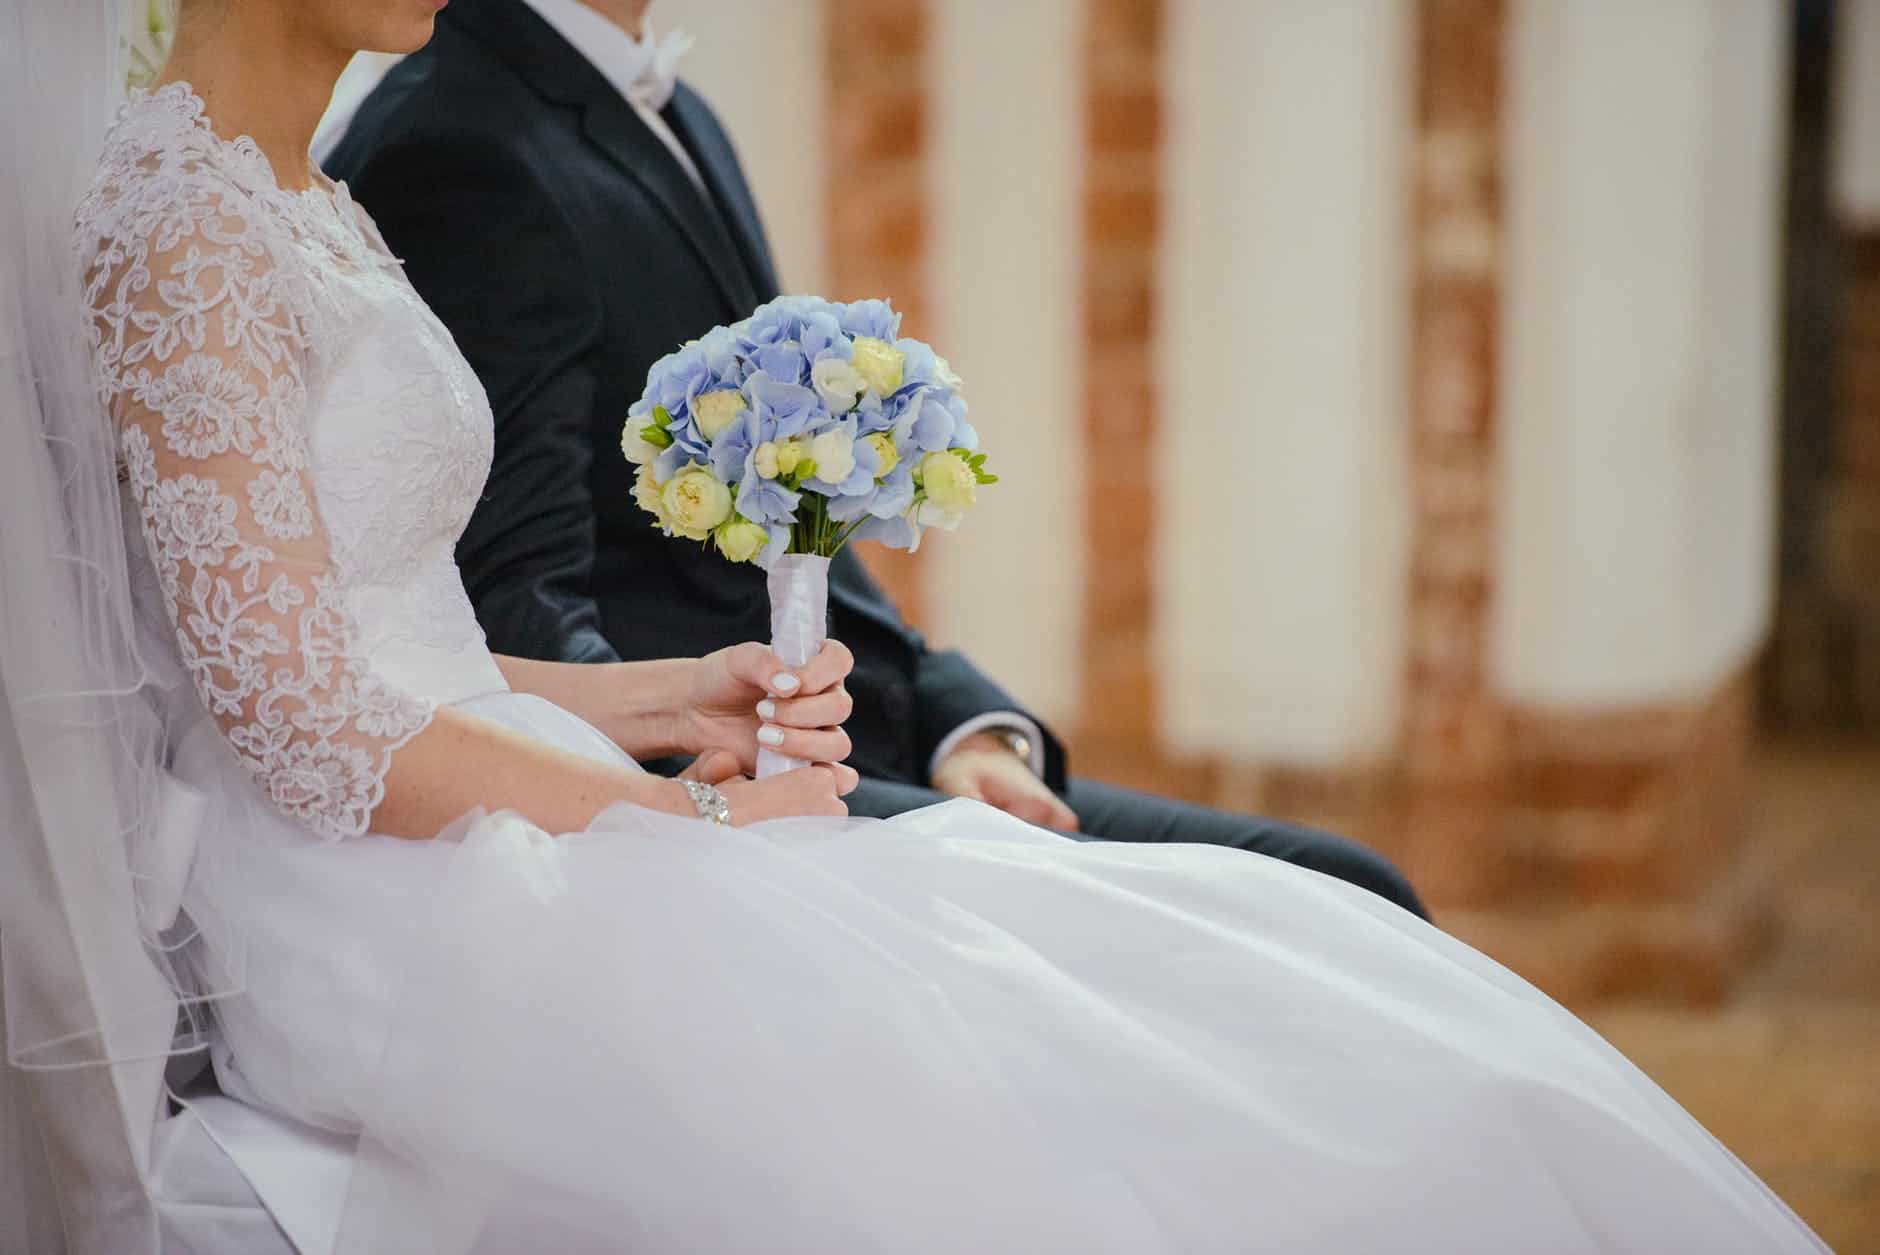 unrecognizable young newlyweds sitting together during wedding celebration